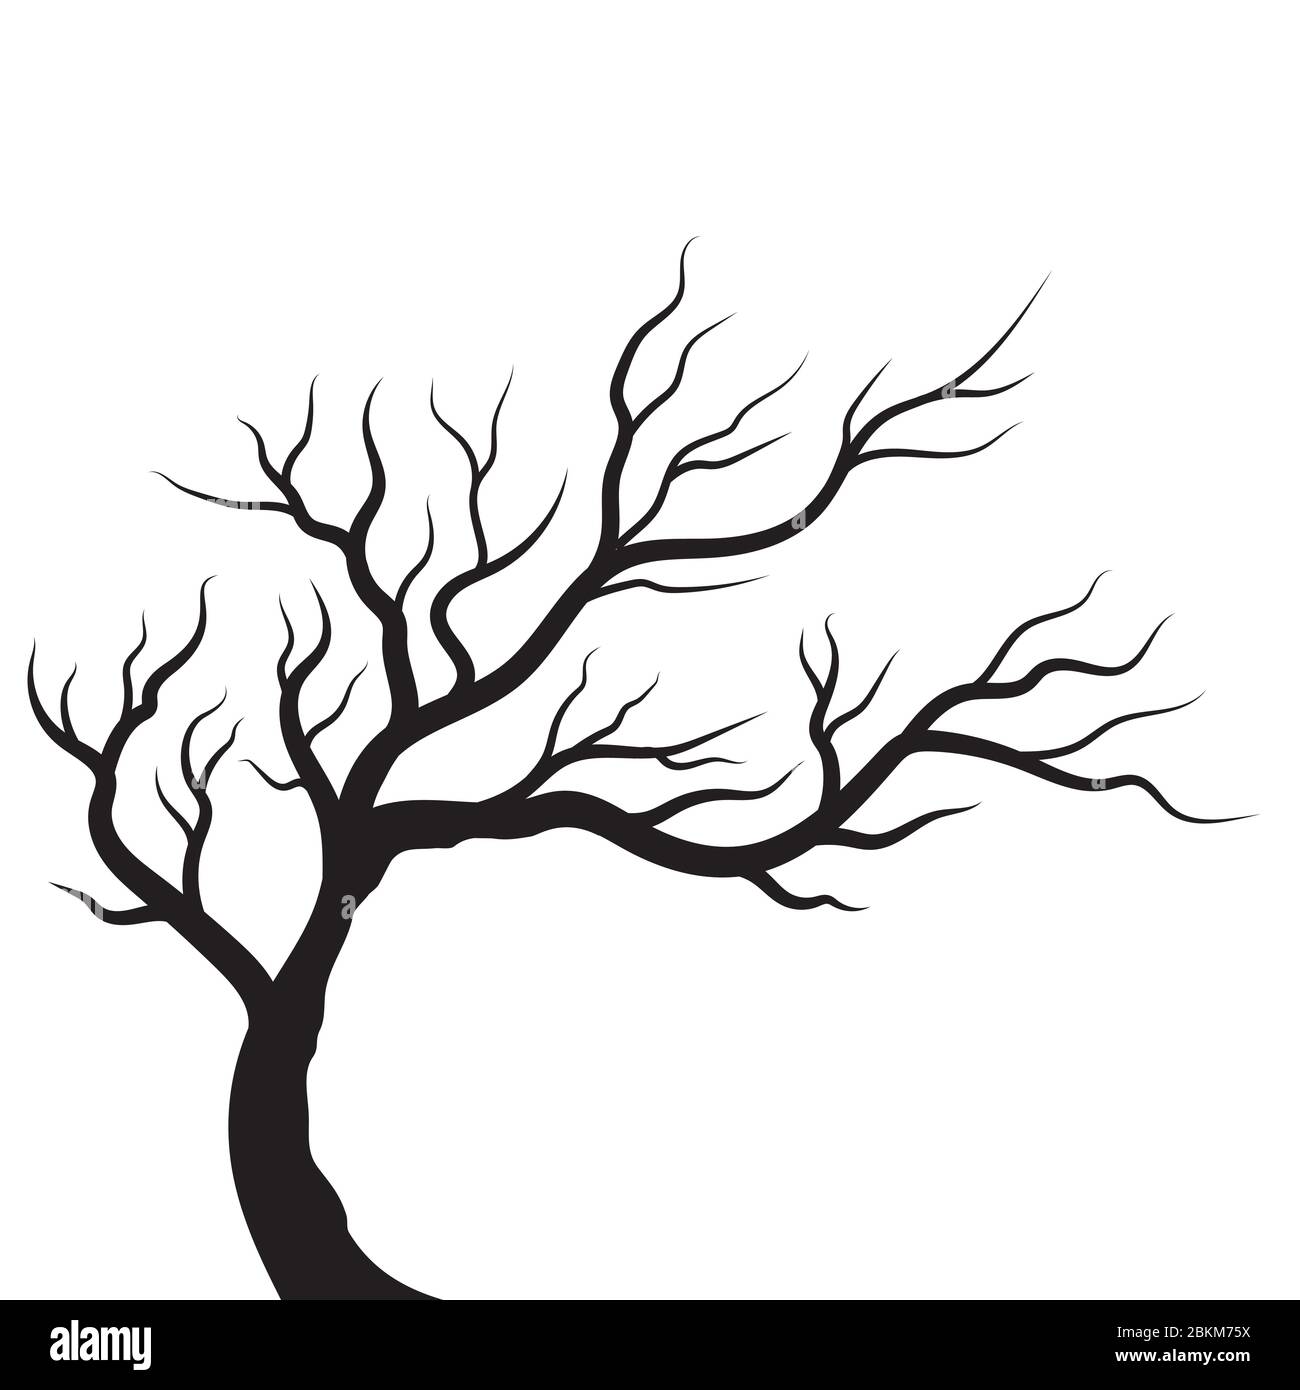 tree branch vector illustration design template Stock Vector Image